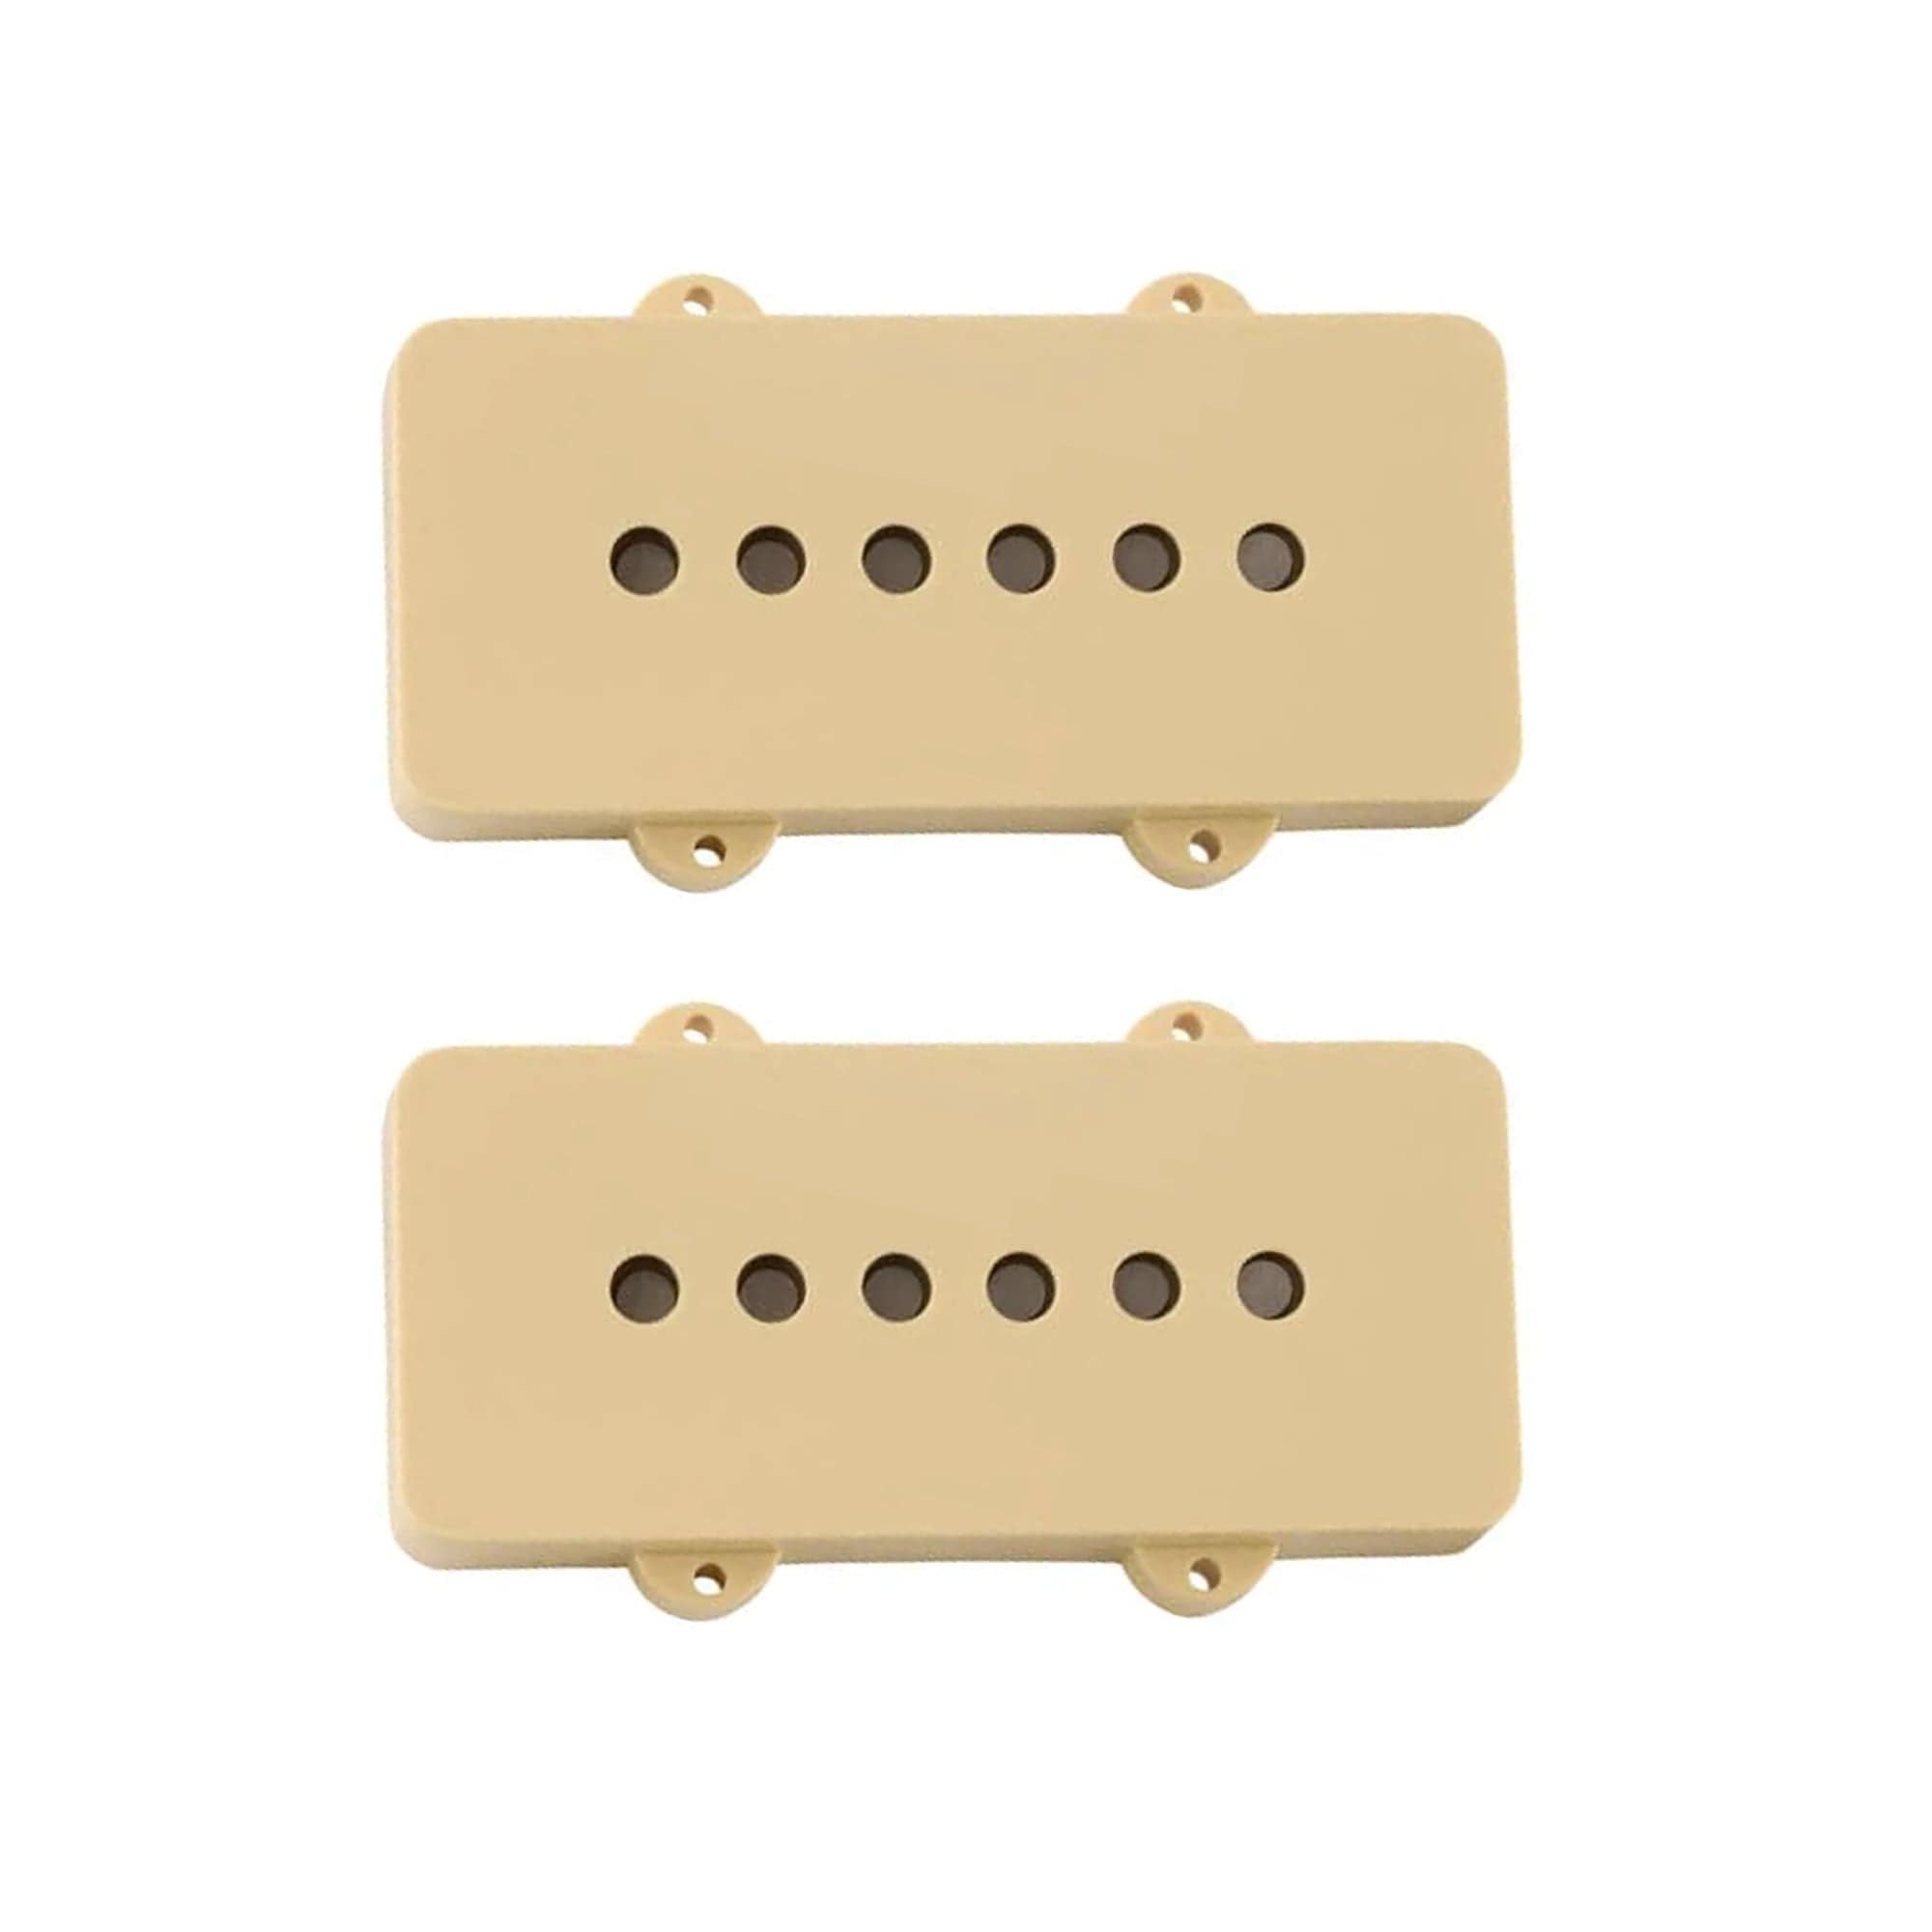 Fender J Mascis Signature Jazzmaster Pickup Set Parts / Guitar Pickups